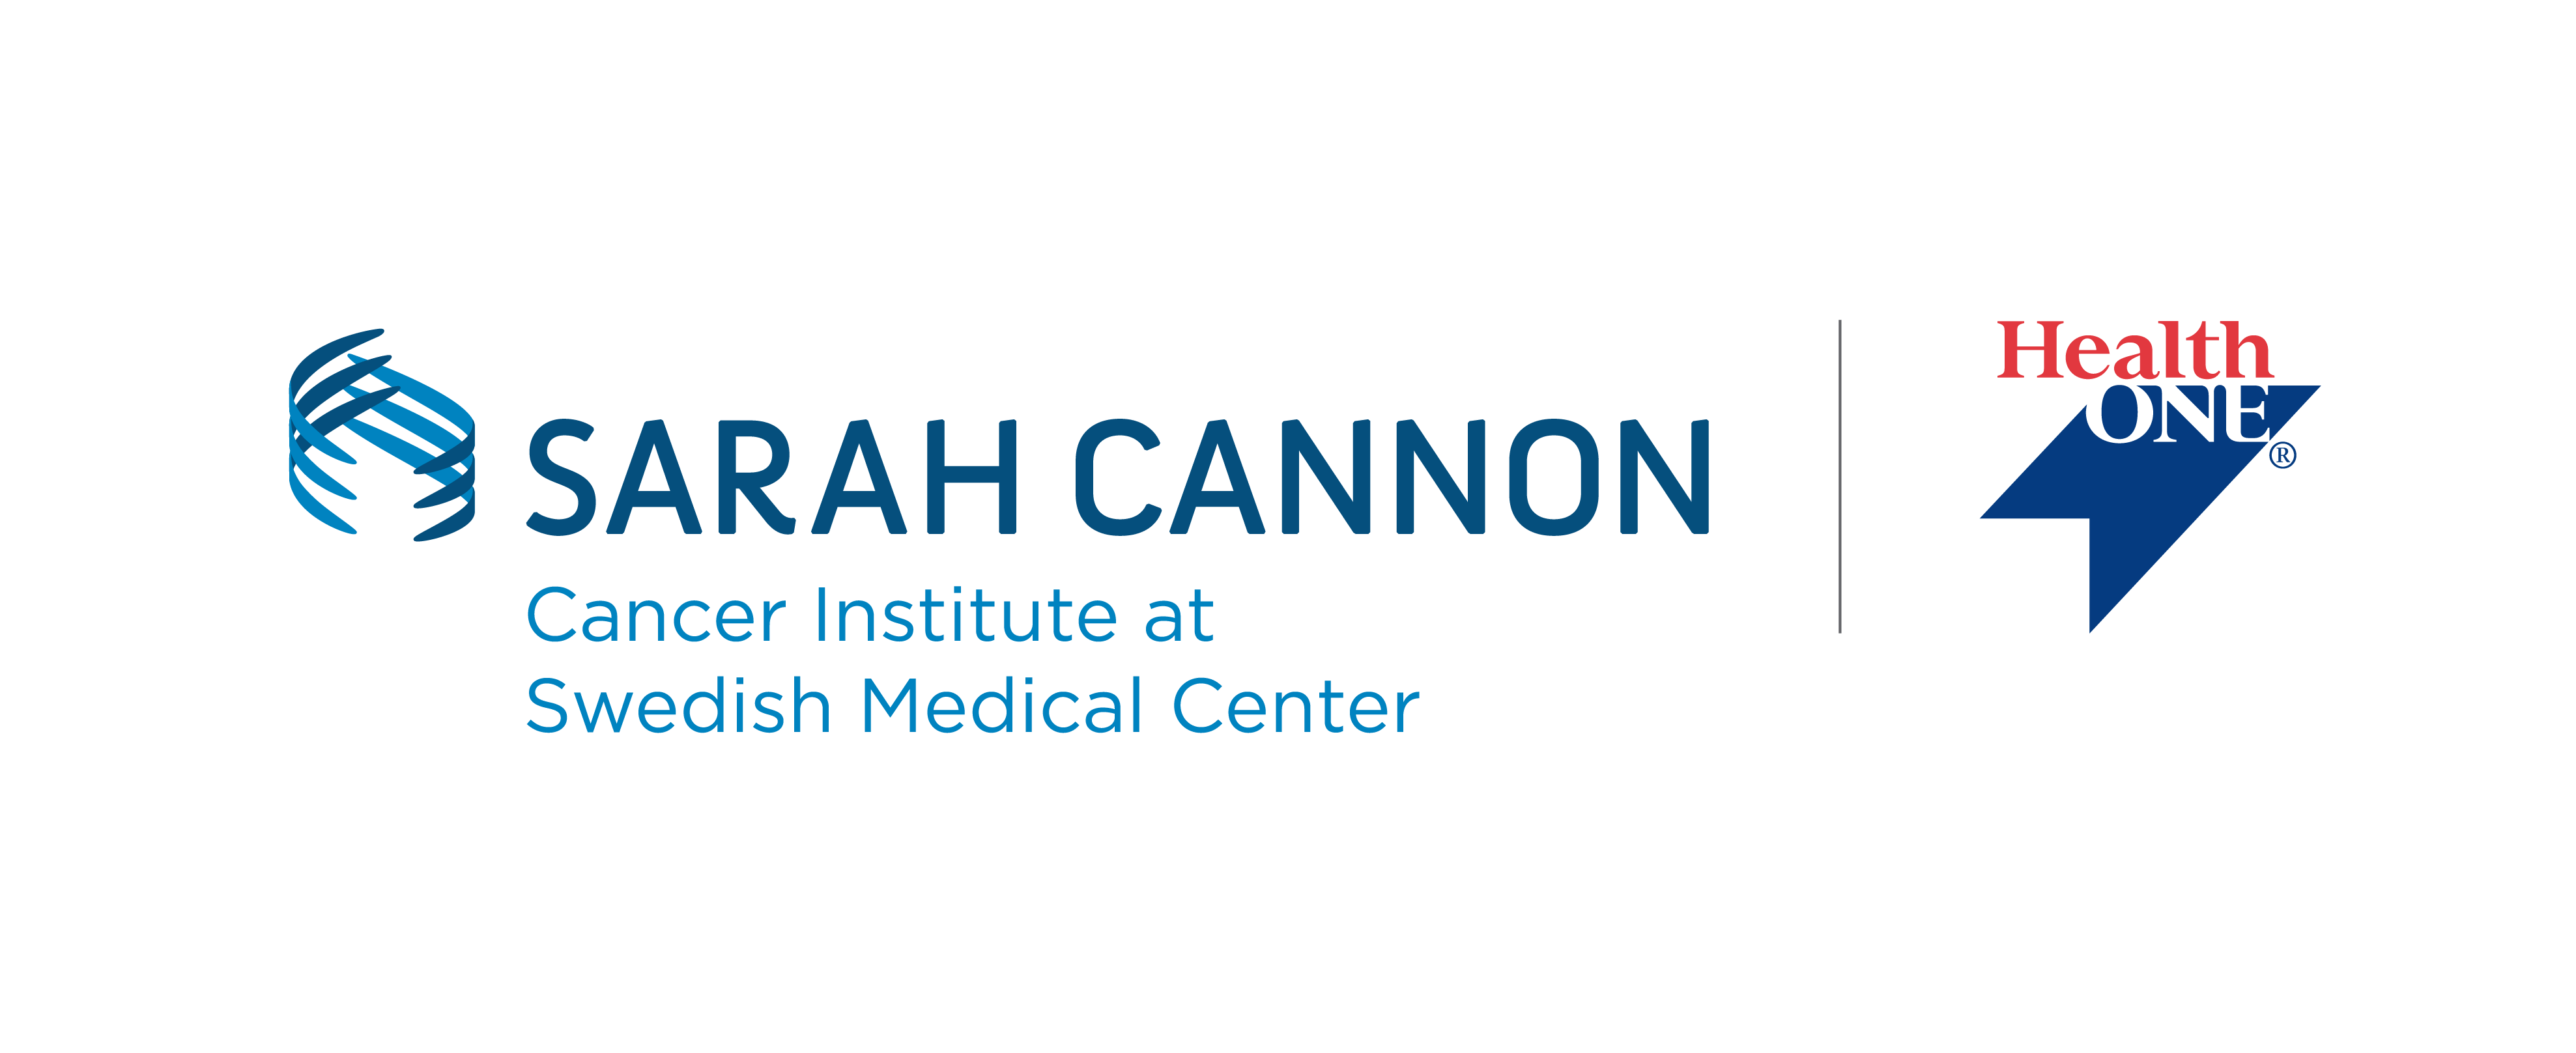 Sarah Cannon Cancer Institute at Swedish Medical Center, HealthONE Cares, Logo.